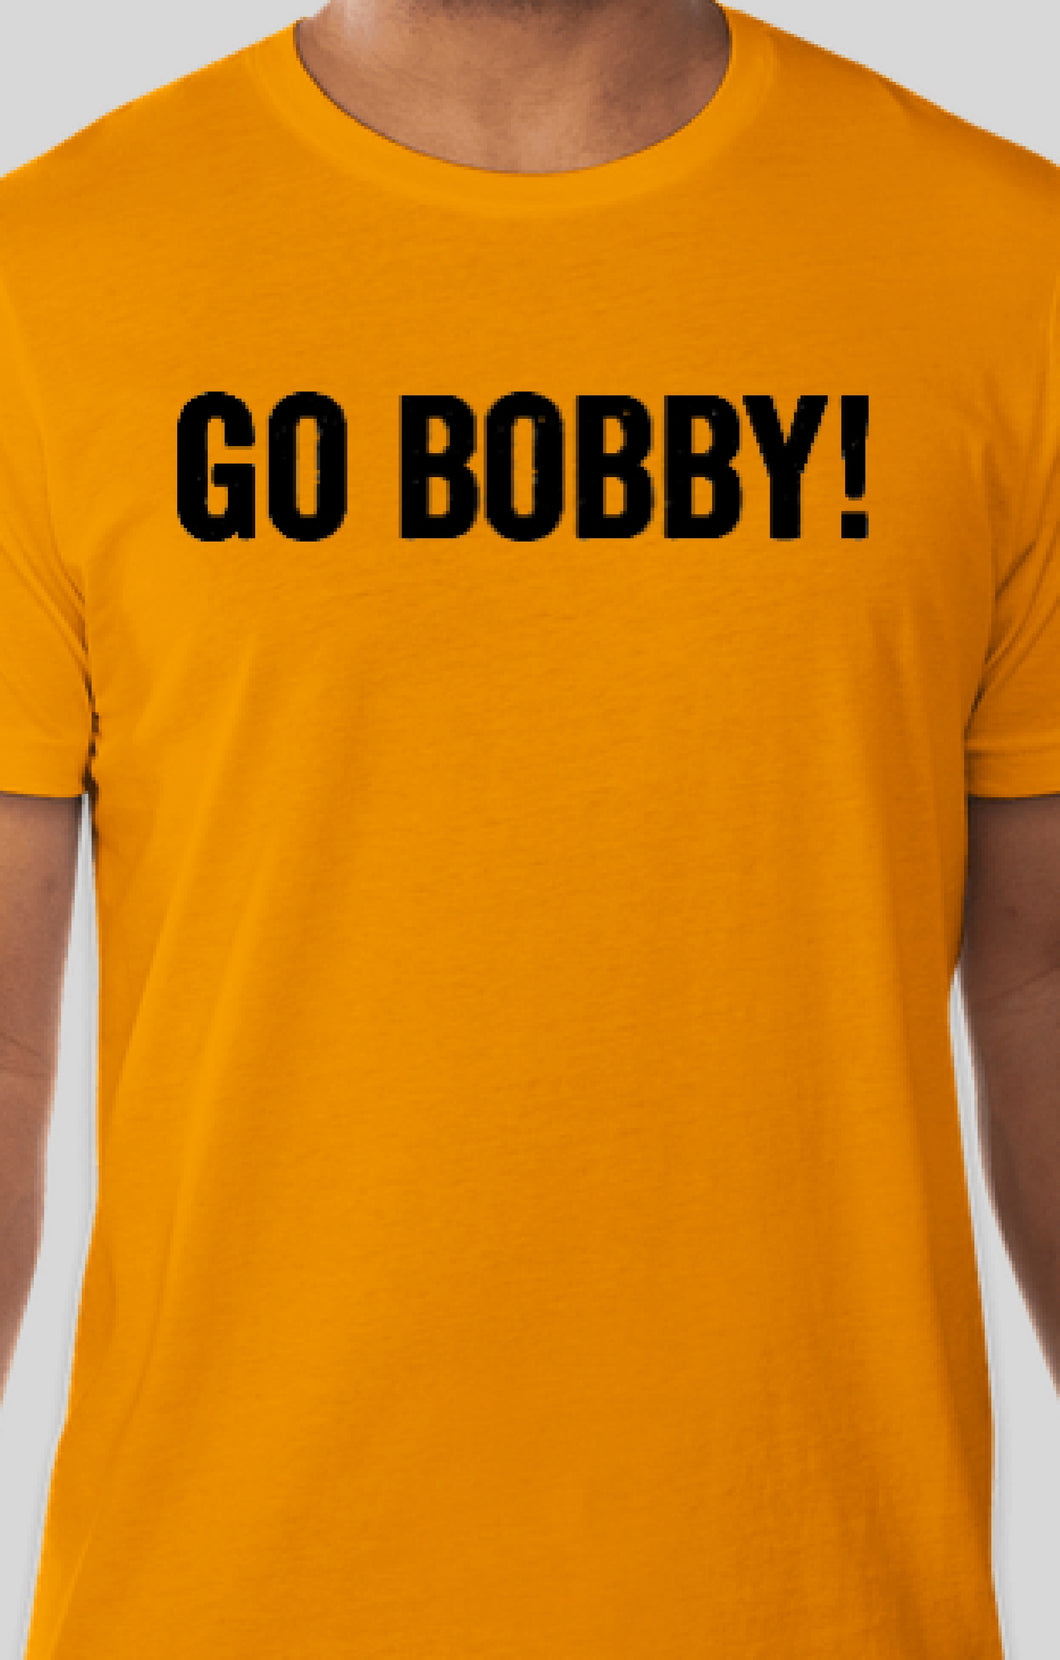 GO BOBBY!